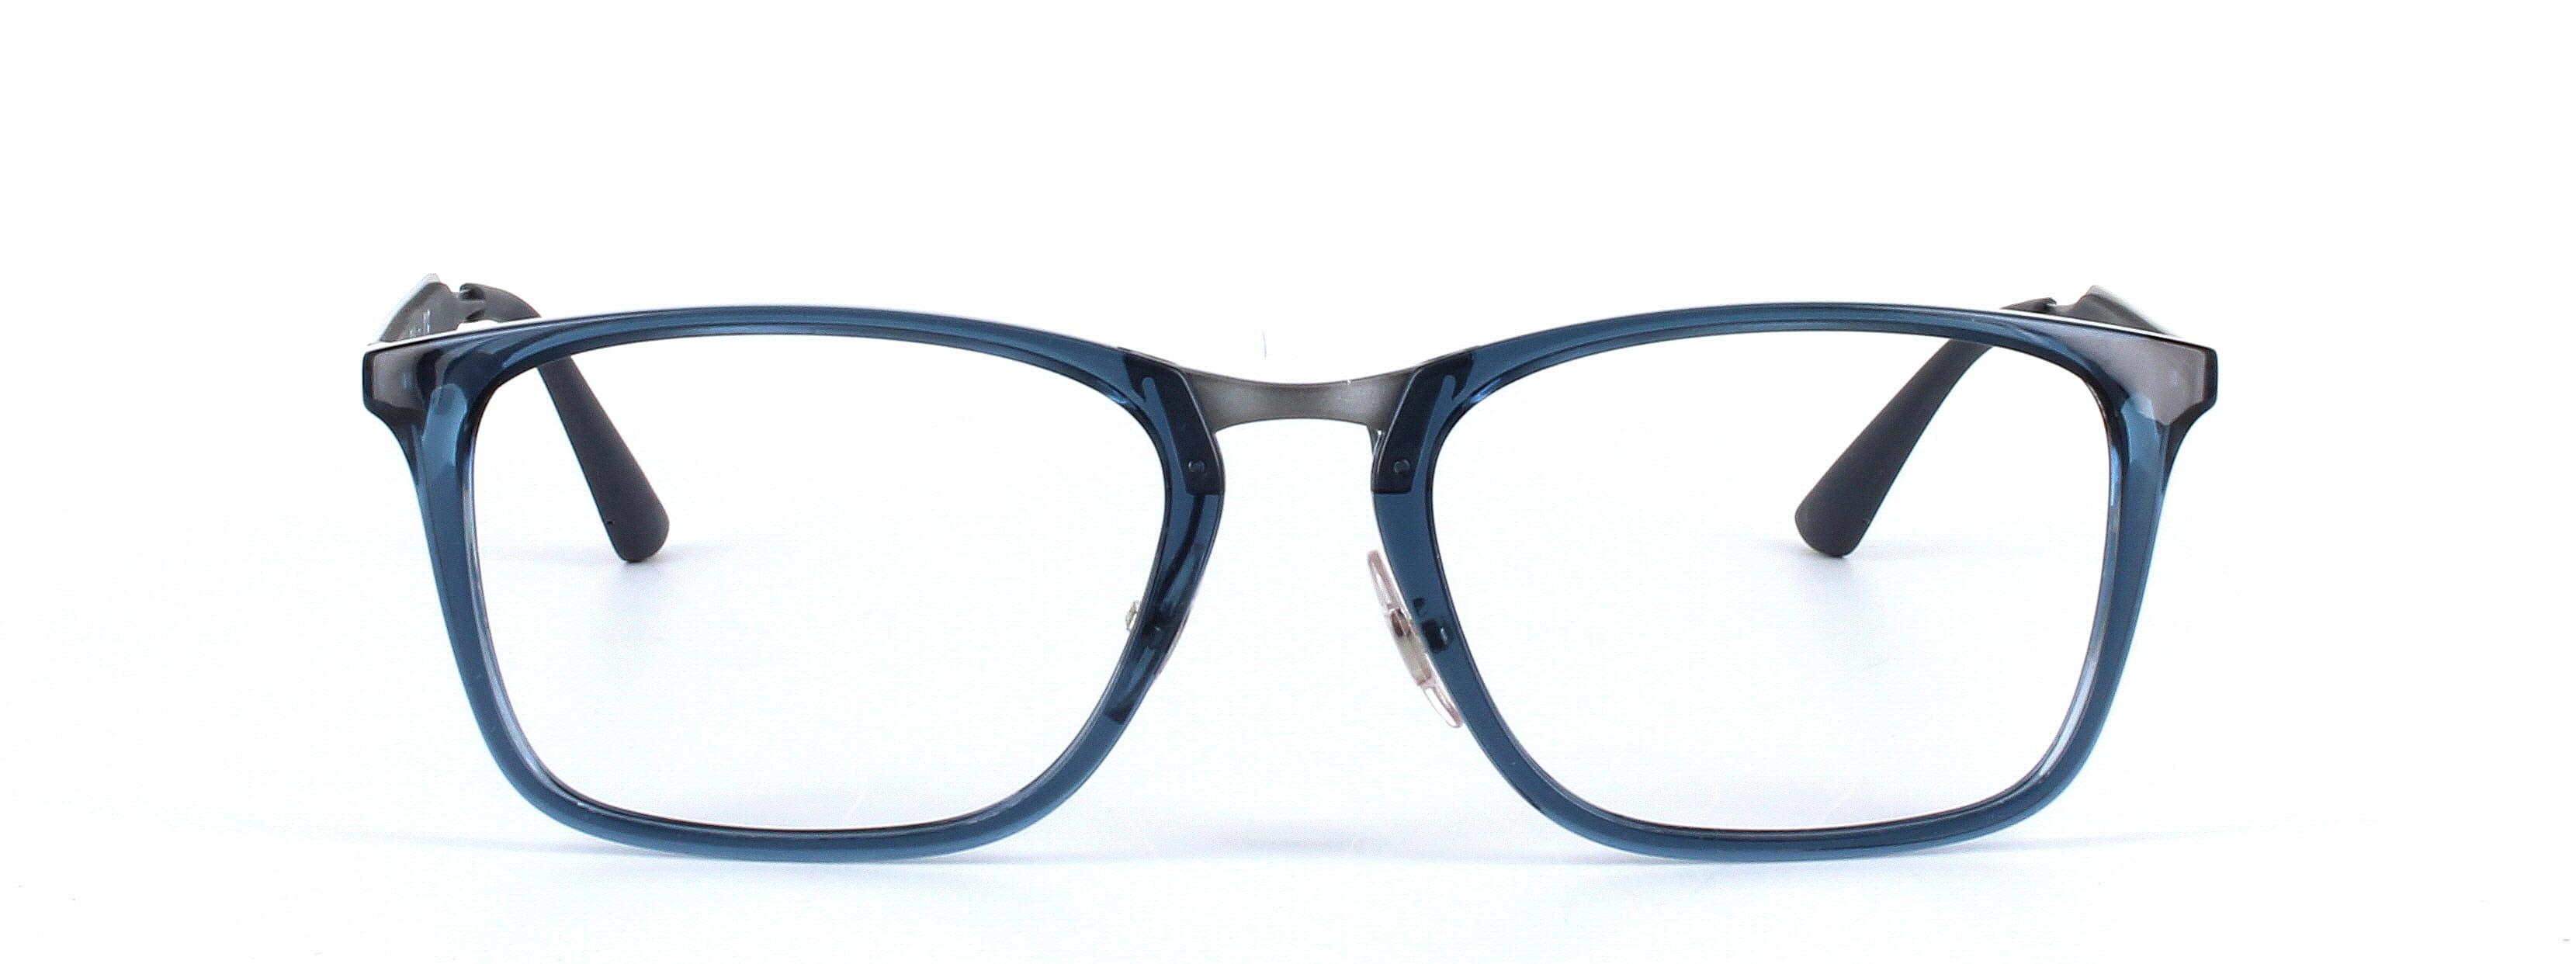 Ray Ban 7131 - gents full-rim gcetate glasses - Crystal blue - image 5